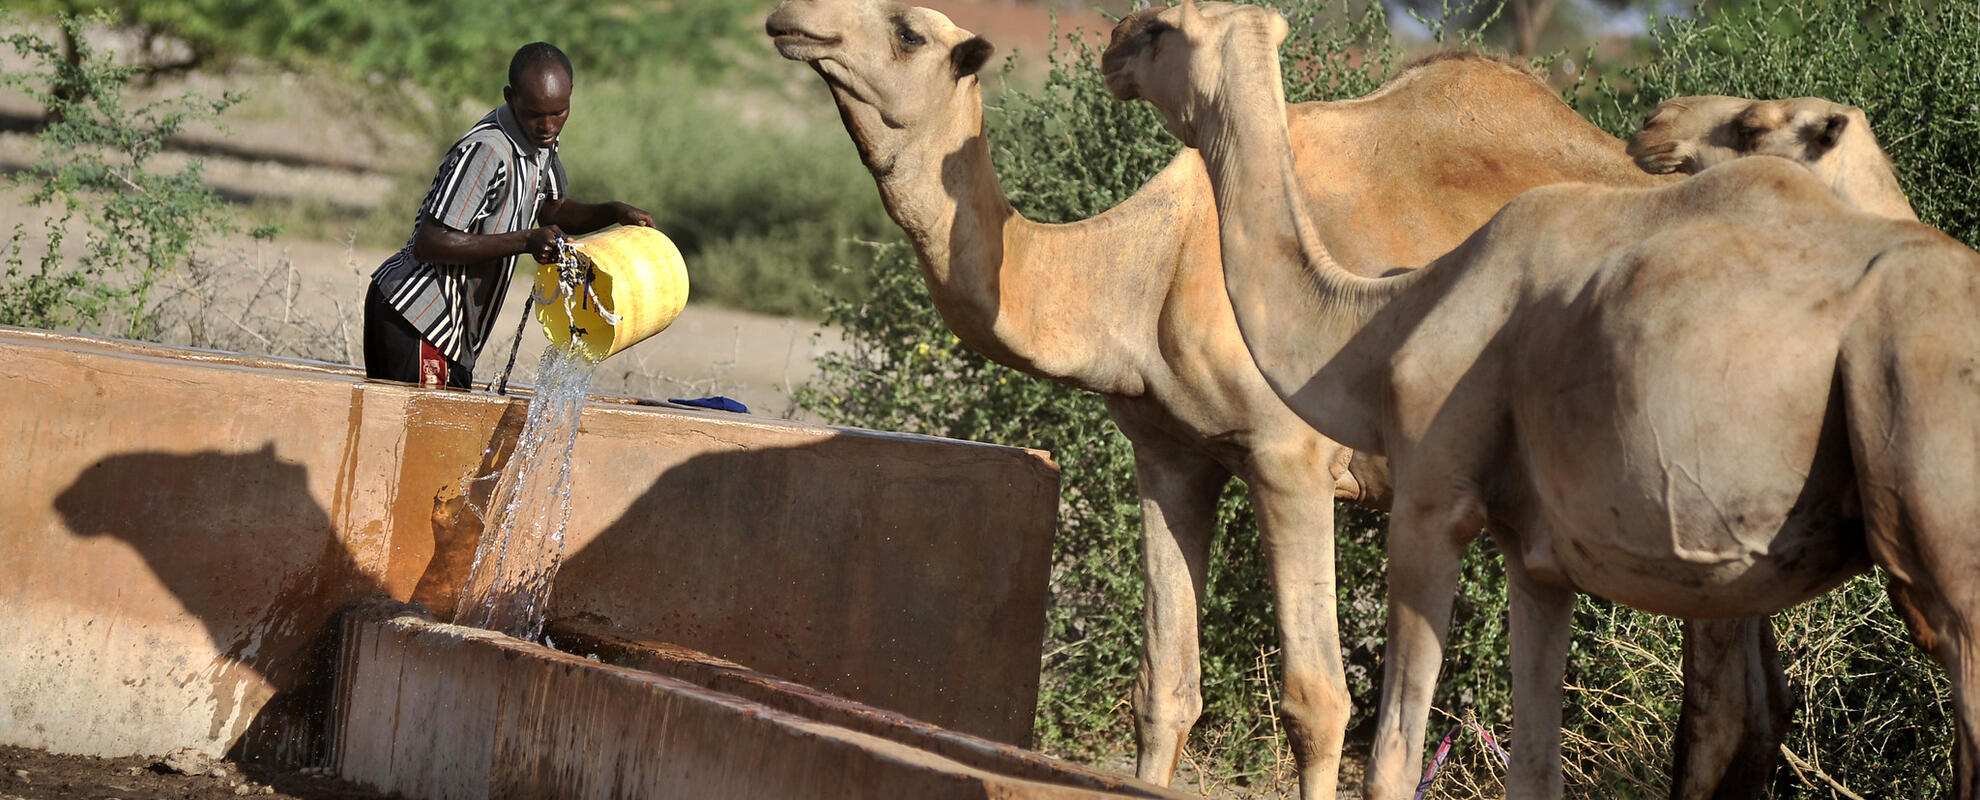 Watering camels near Wajir, northern Kenya